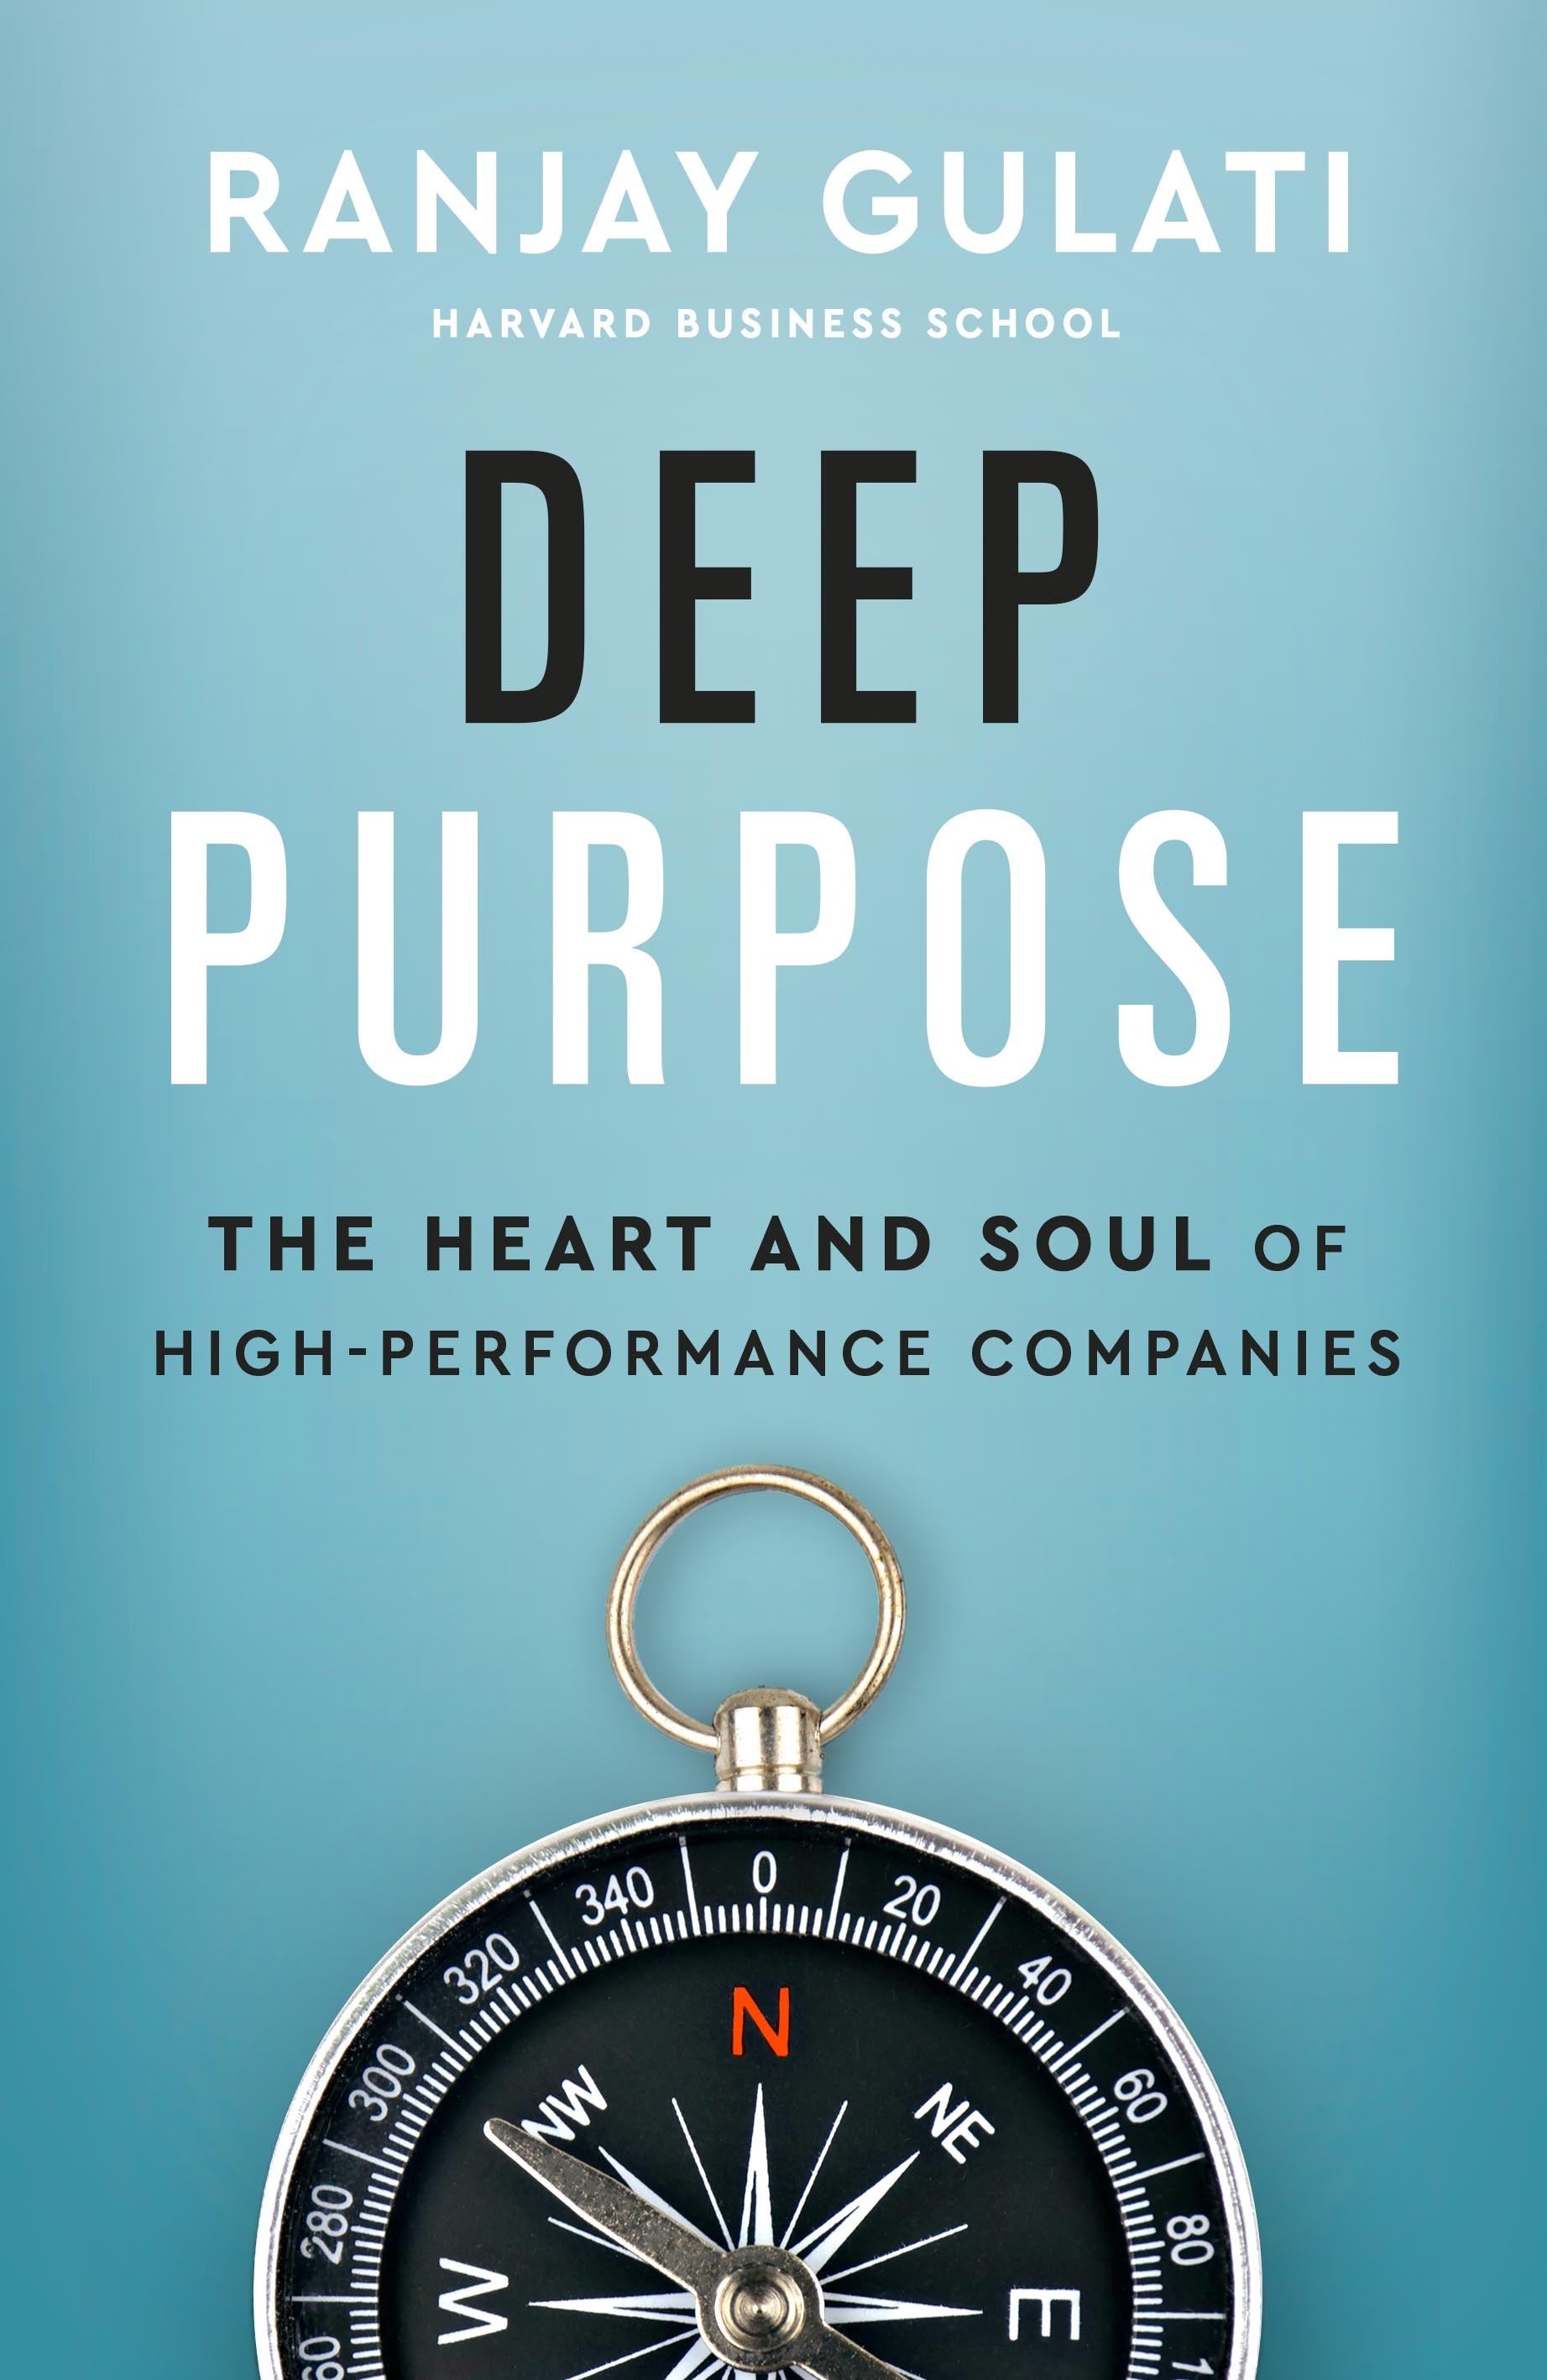 Book “Deep Purpose” by Ranjay Gulati — February 10, 2022